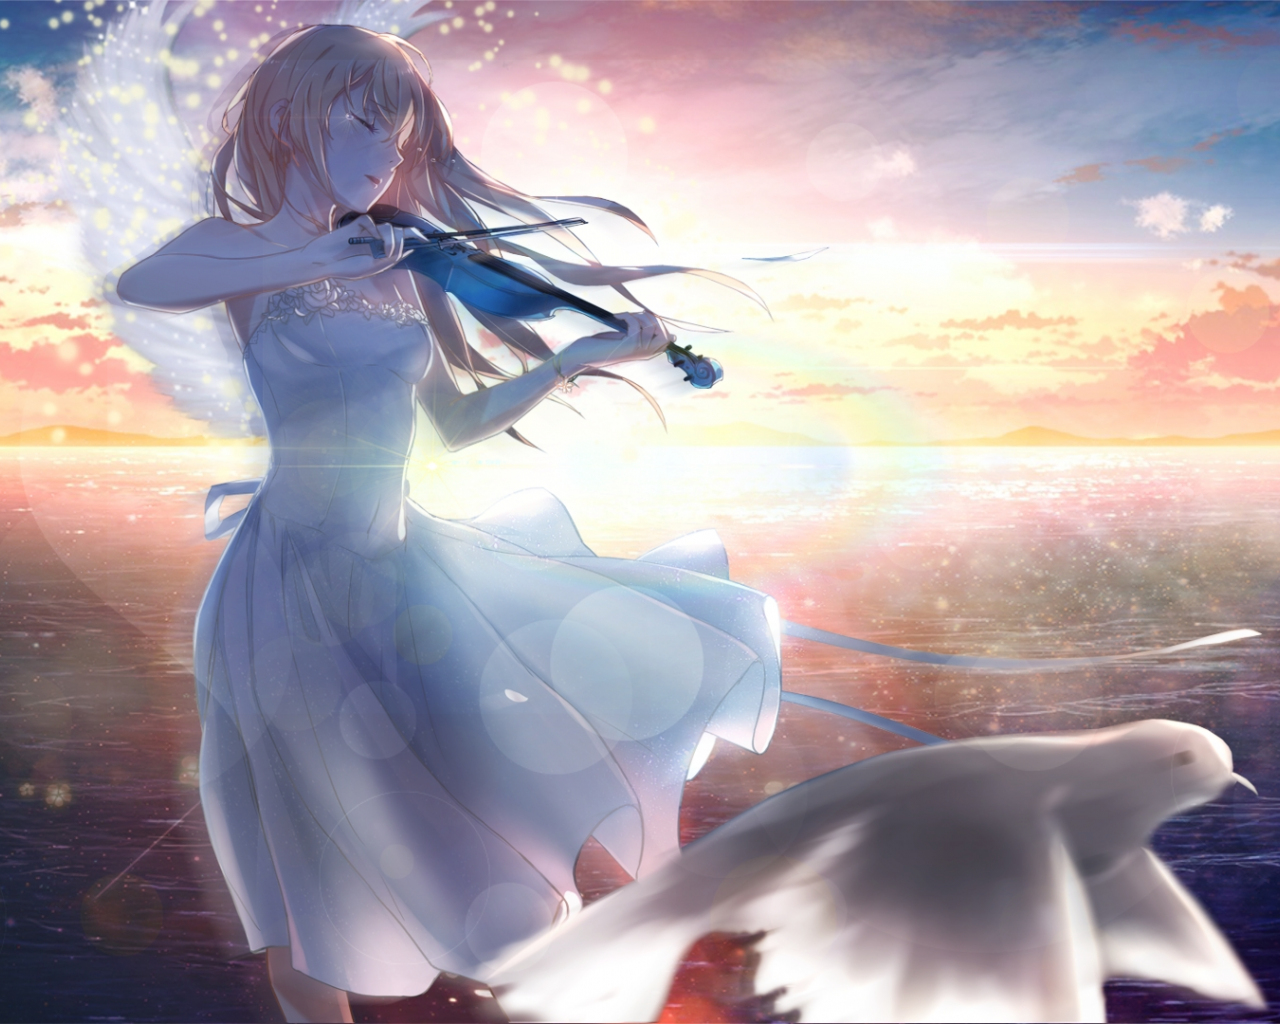 Desktop Wallpaper Kaori Miyazono Anime Girl Playing Violin Dove Hd Image Picture Background Fzo5jj